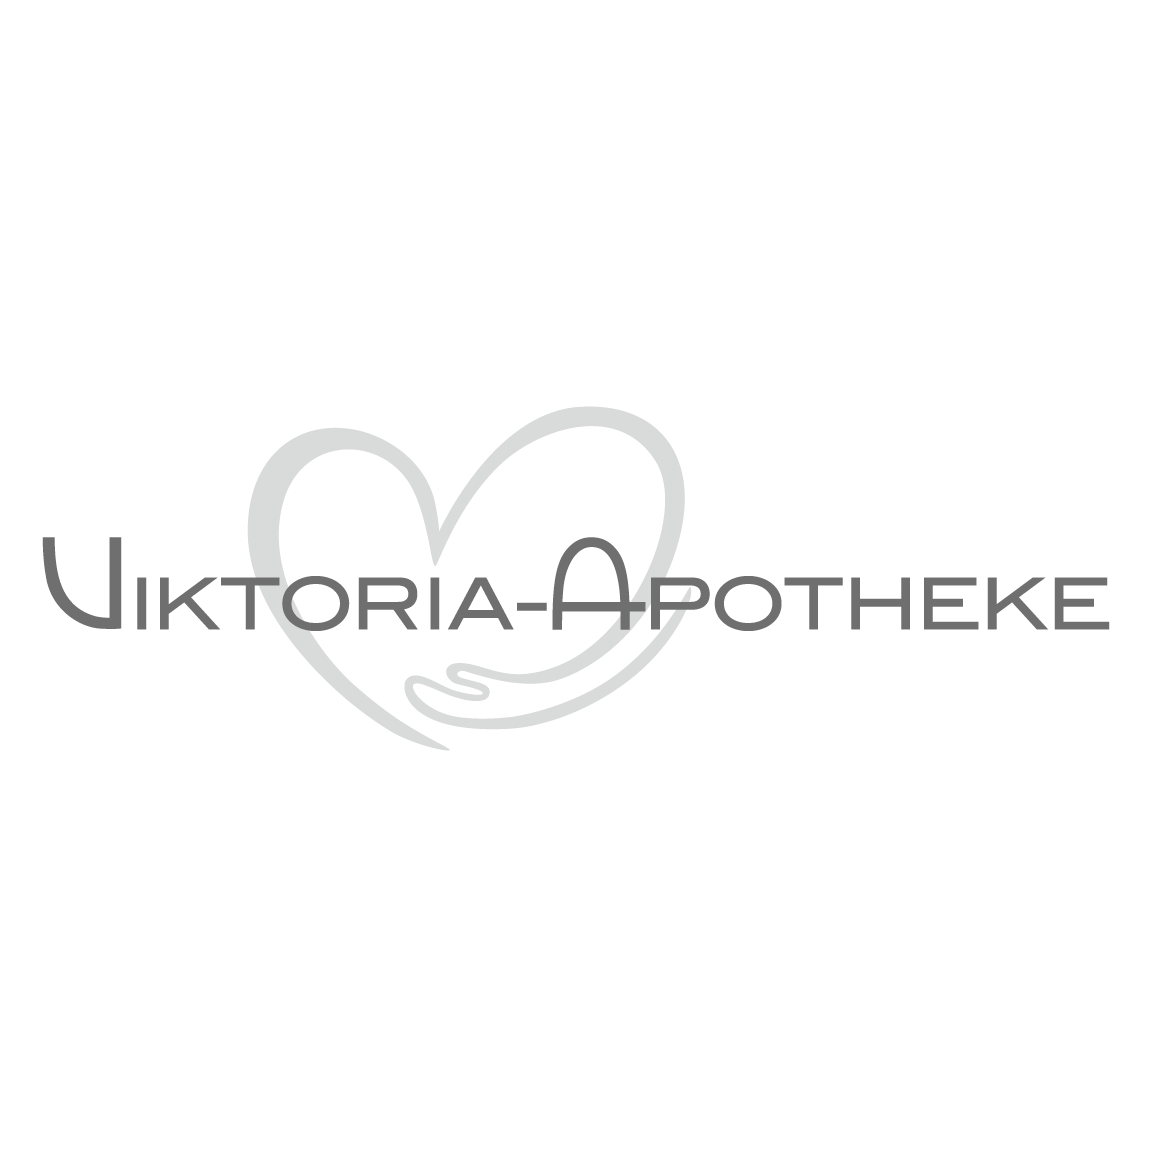 Kundenlogo Viktoria-Apotheke